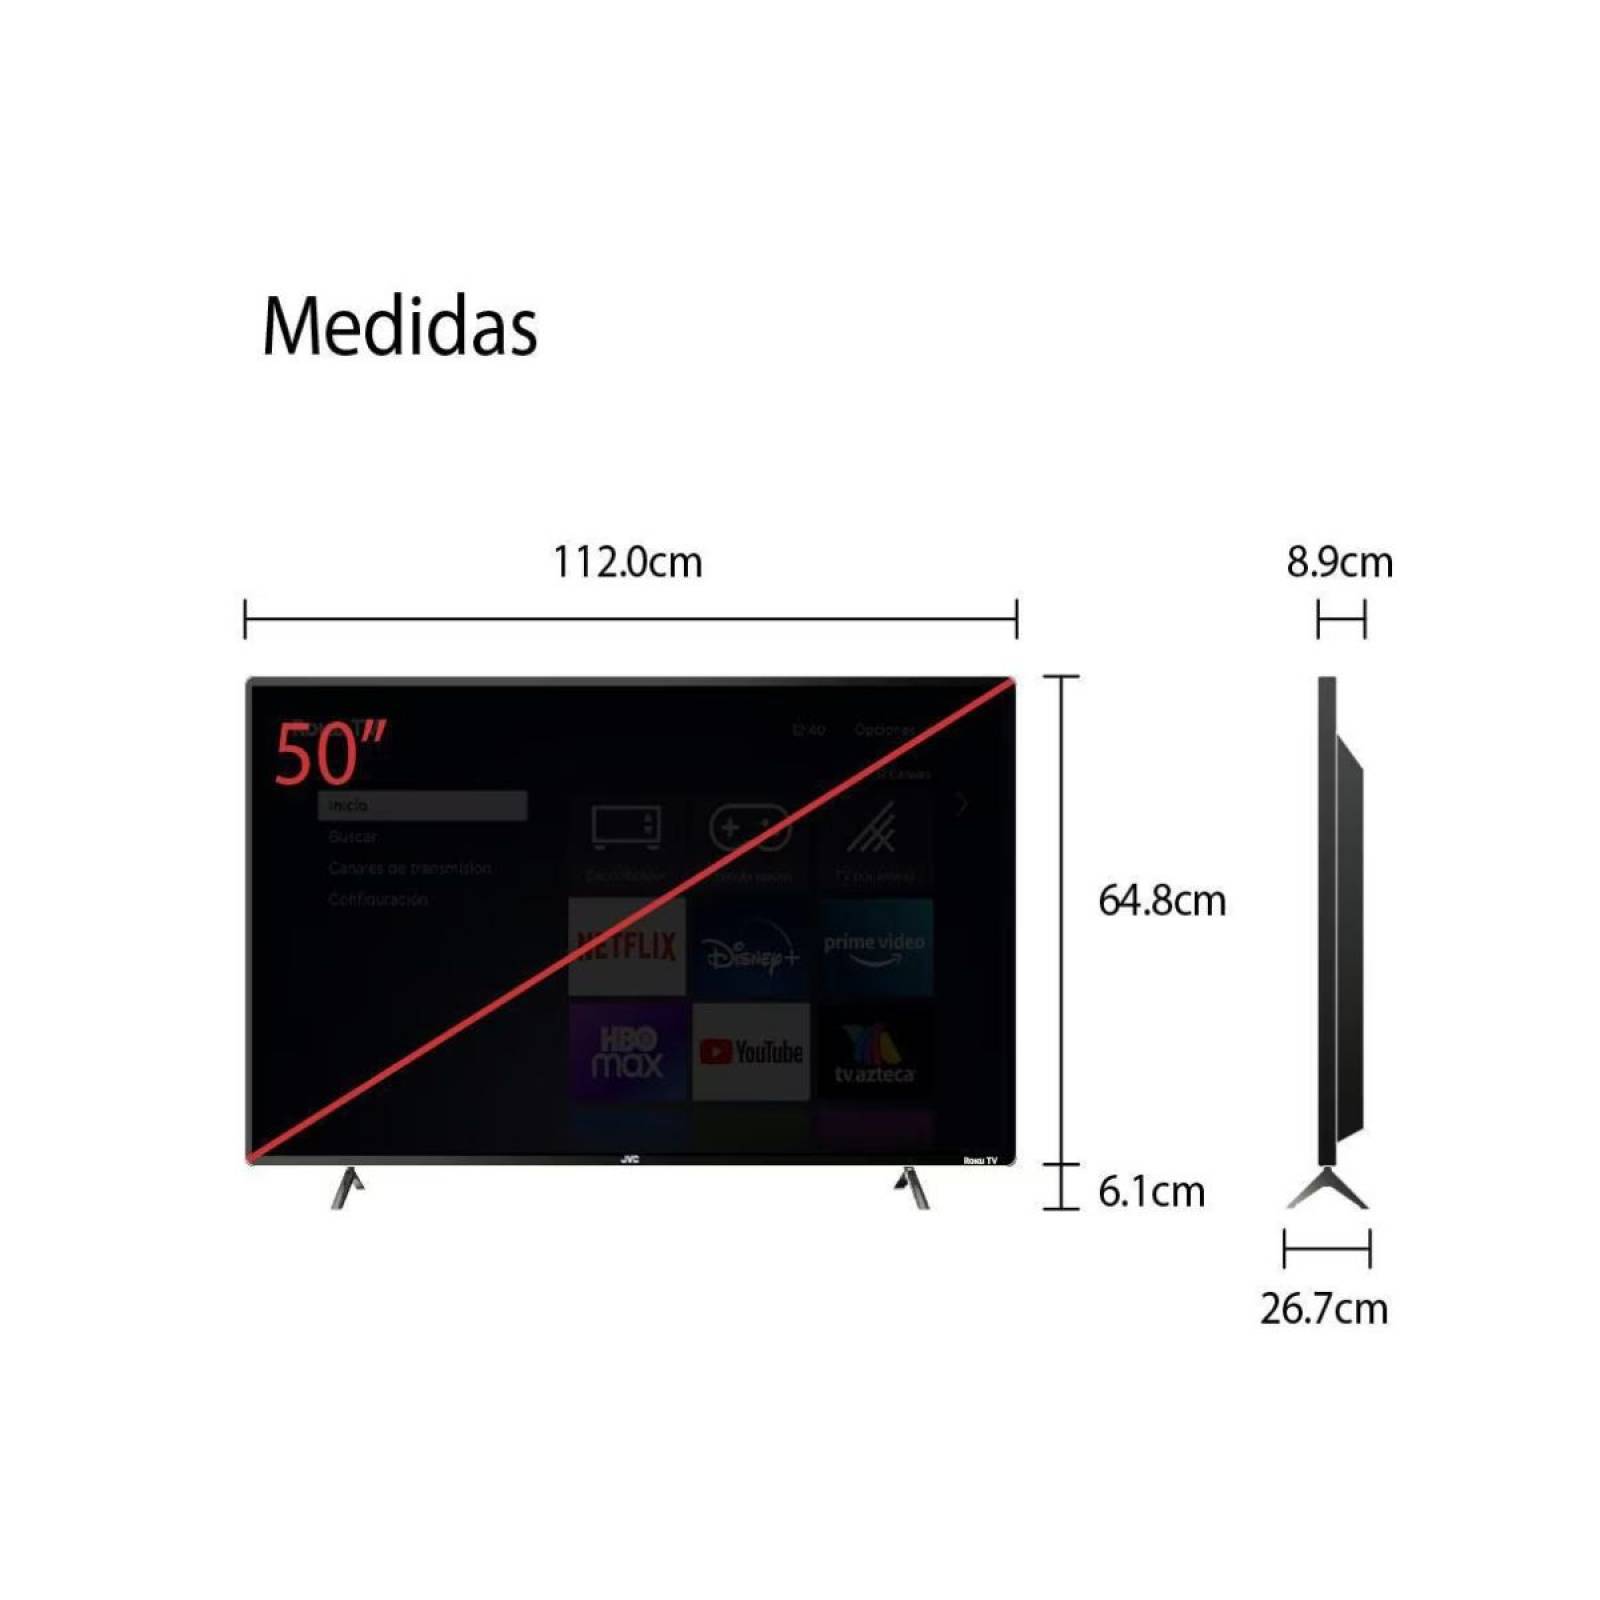 Pantalla Smart TV JVC LED de 50 pulgadas 4K/UHD SI50UR con Roku TV